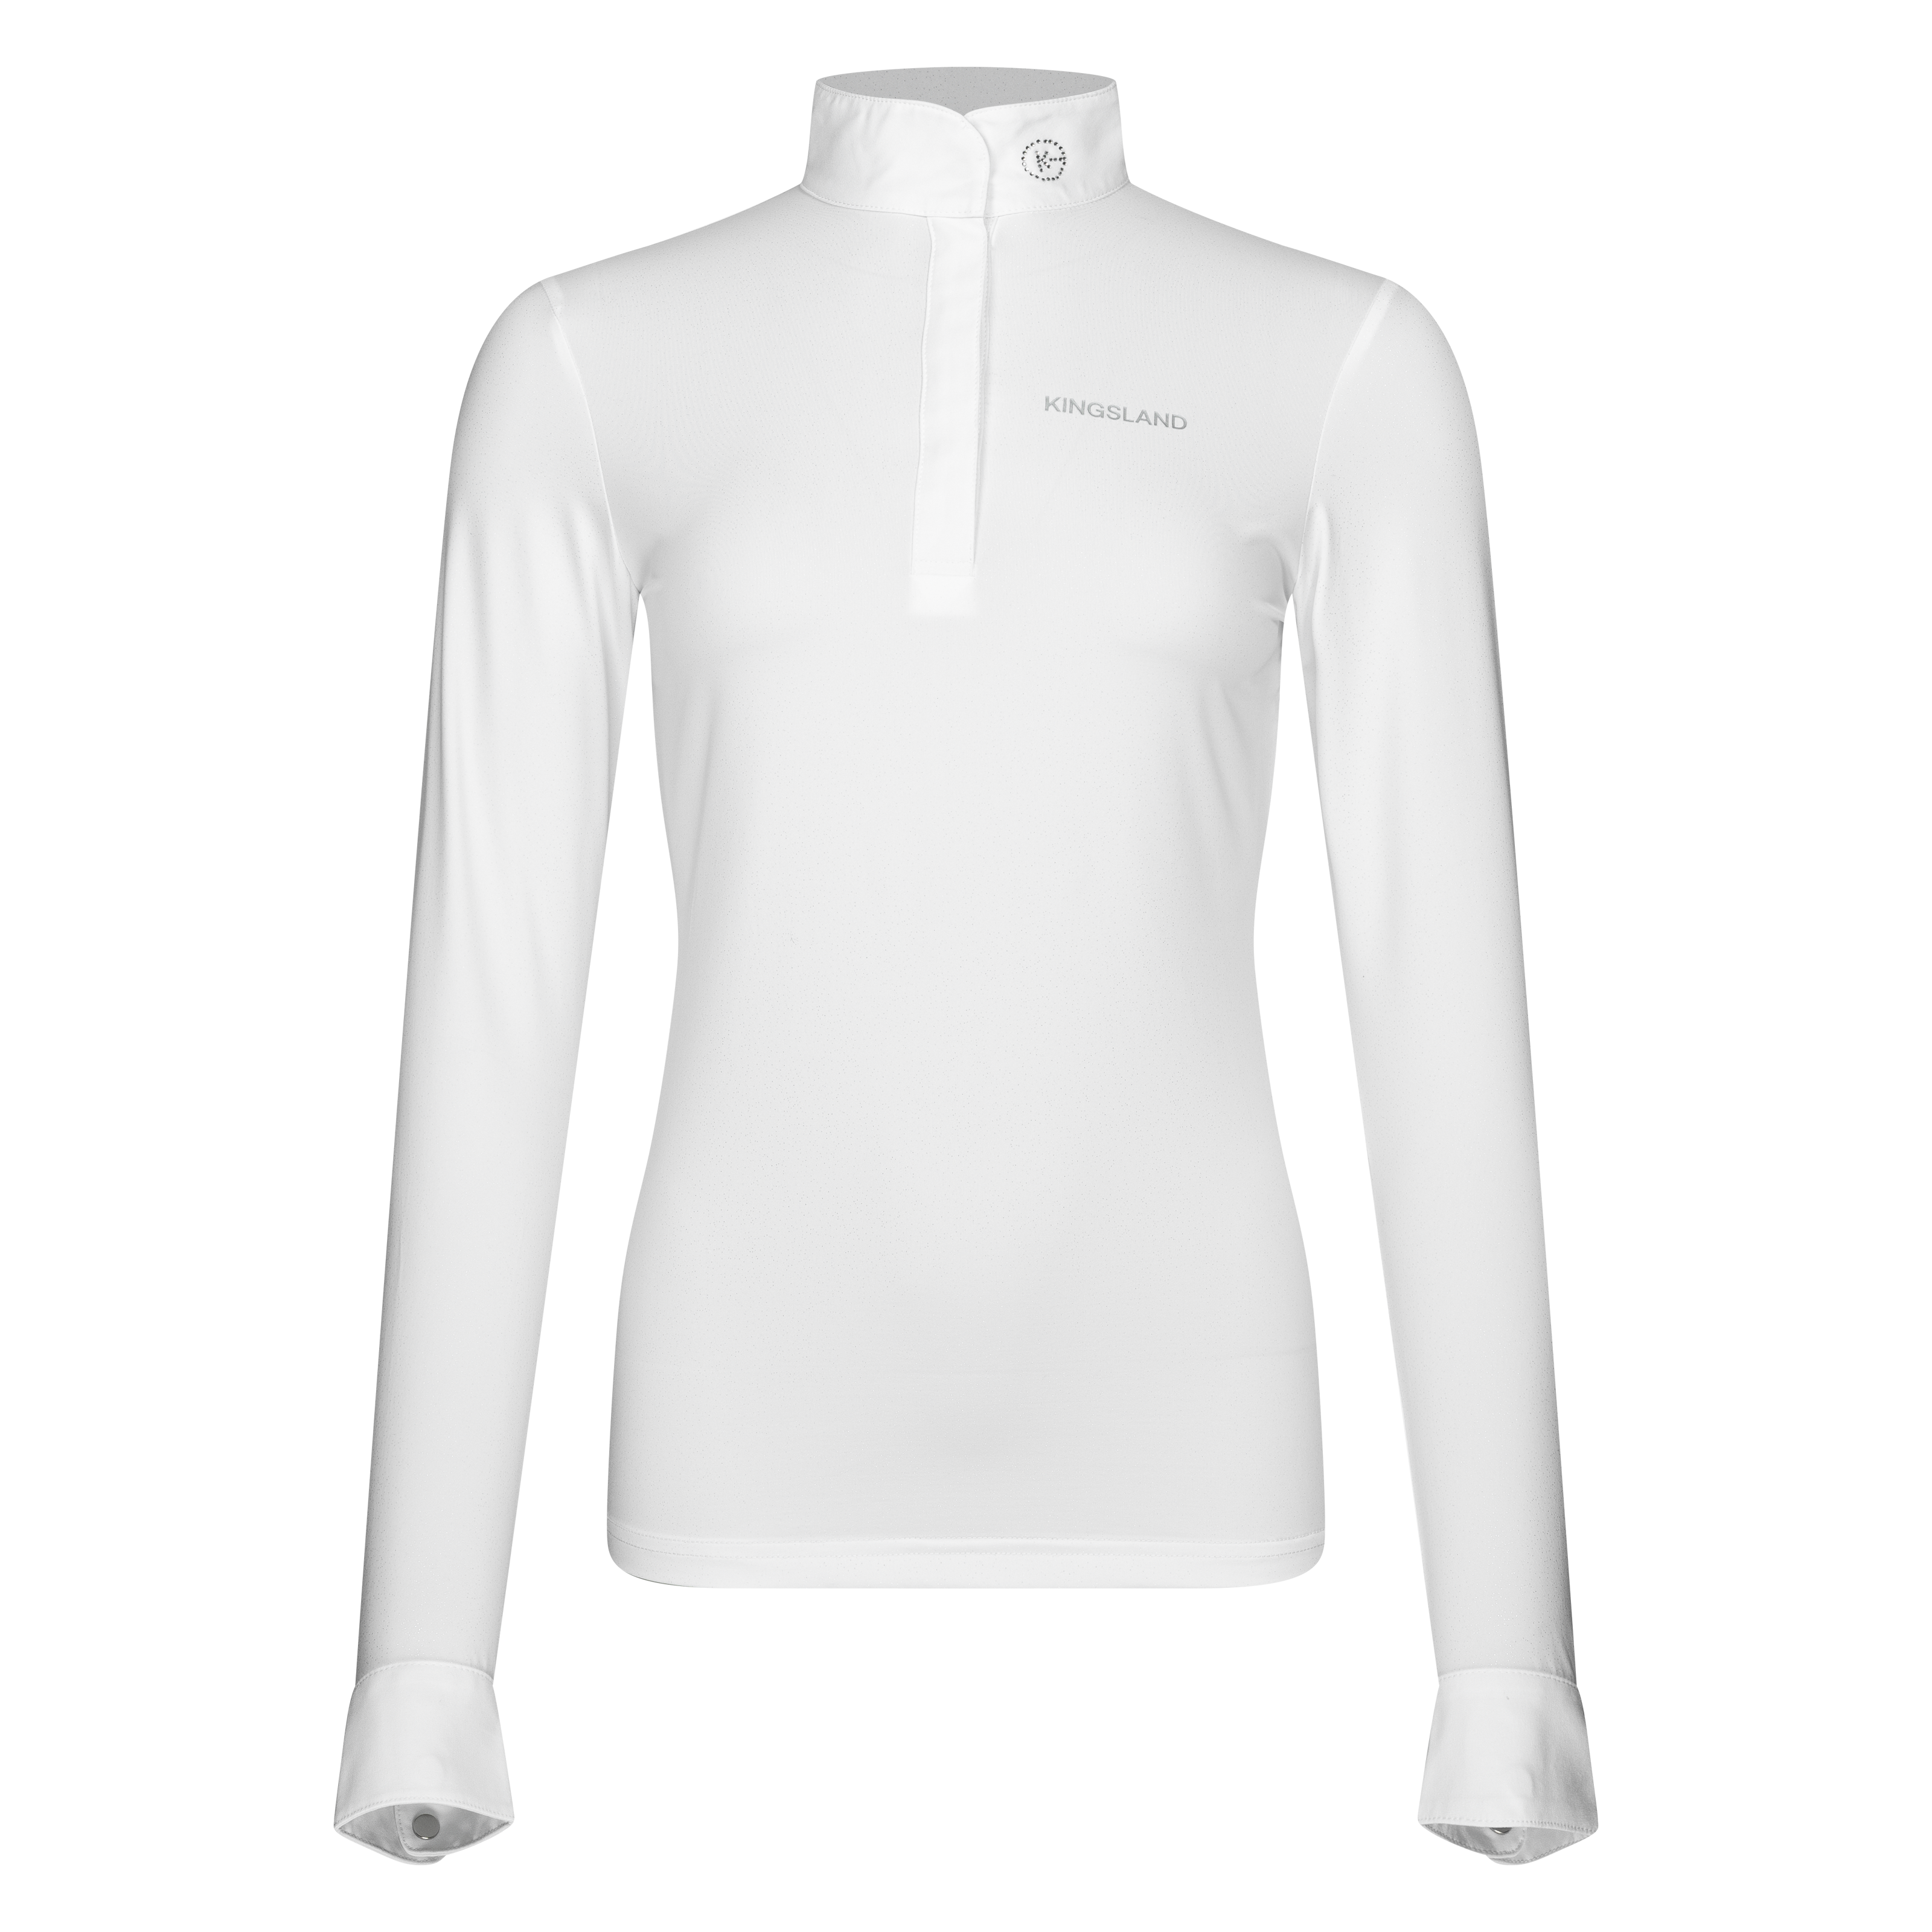 KLgloria Turniershirt - Weiß